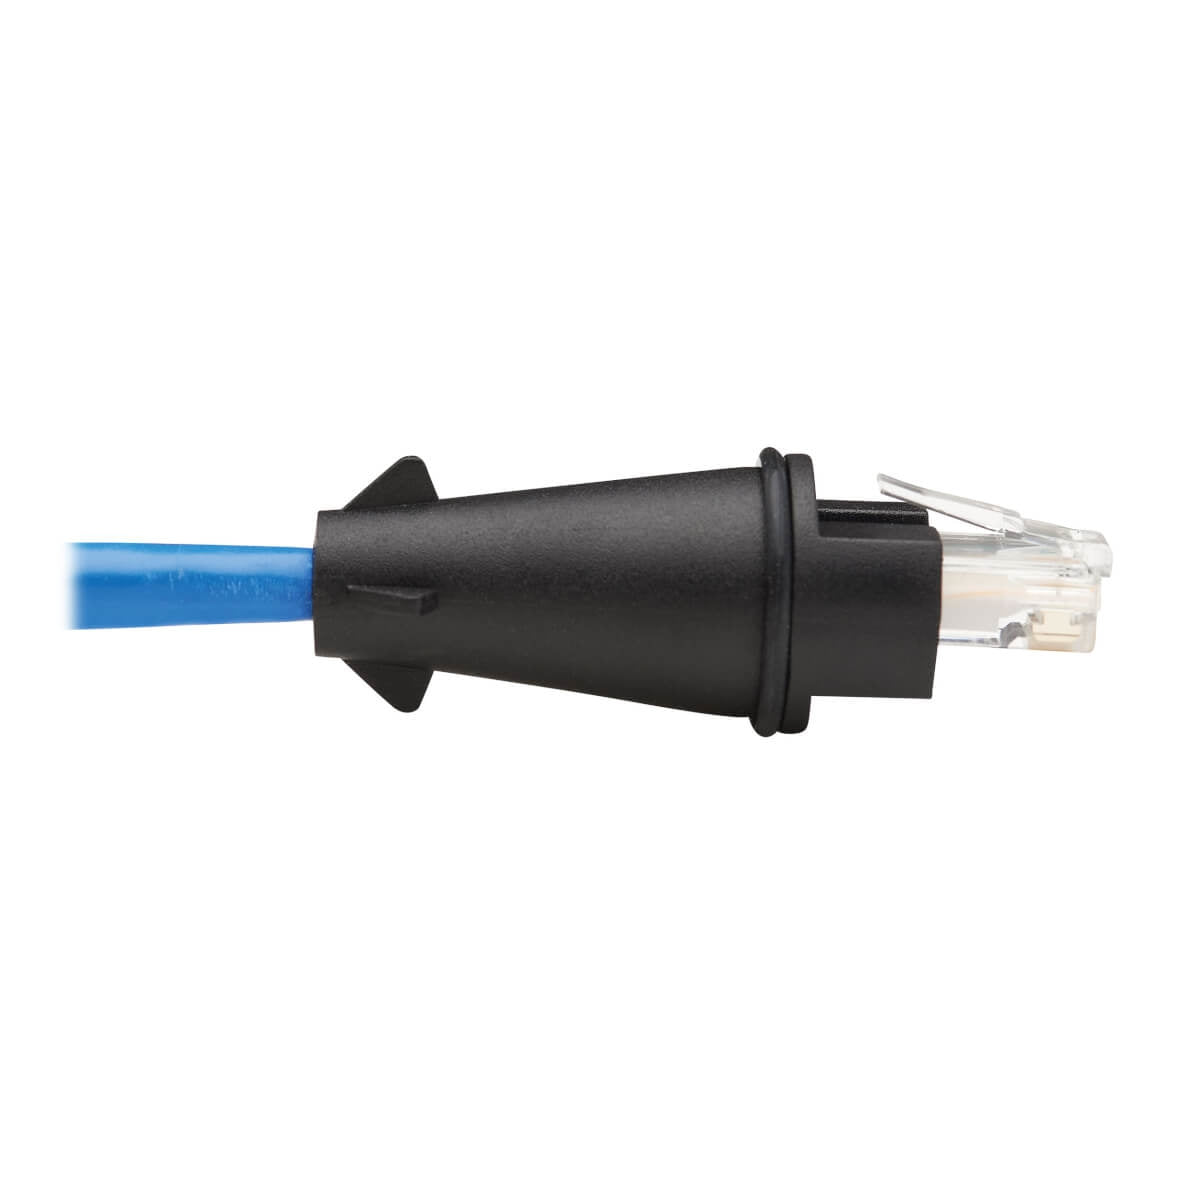 Cable Ethernet Upt Cat6 Industrial Tripp-Lite N200P-010Bl-Ind 305 M Azul